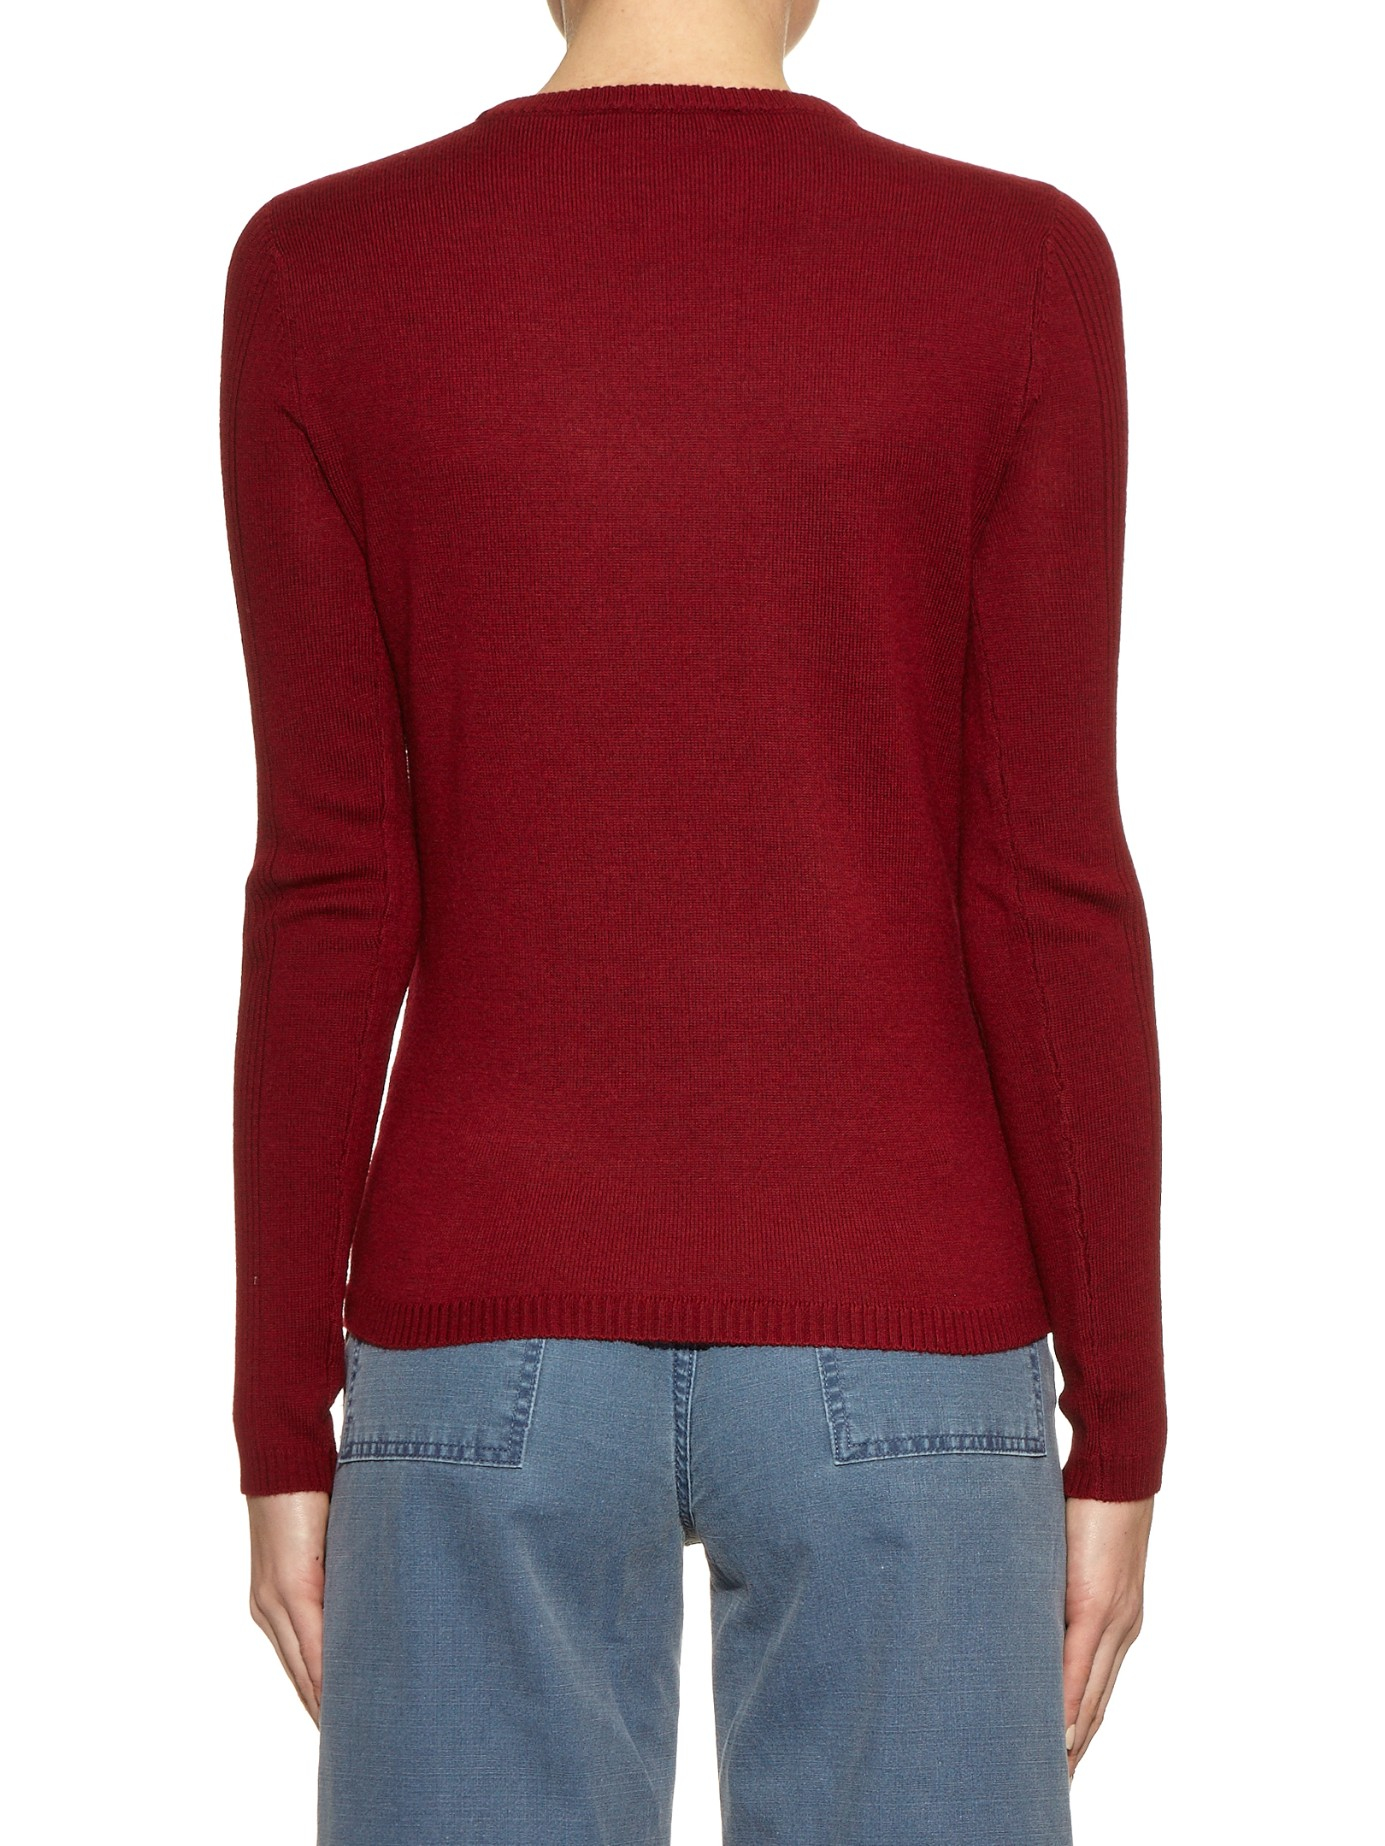 Lyst - Bella Freud Blondes Wool Sweater in Red